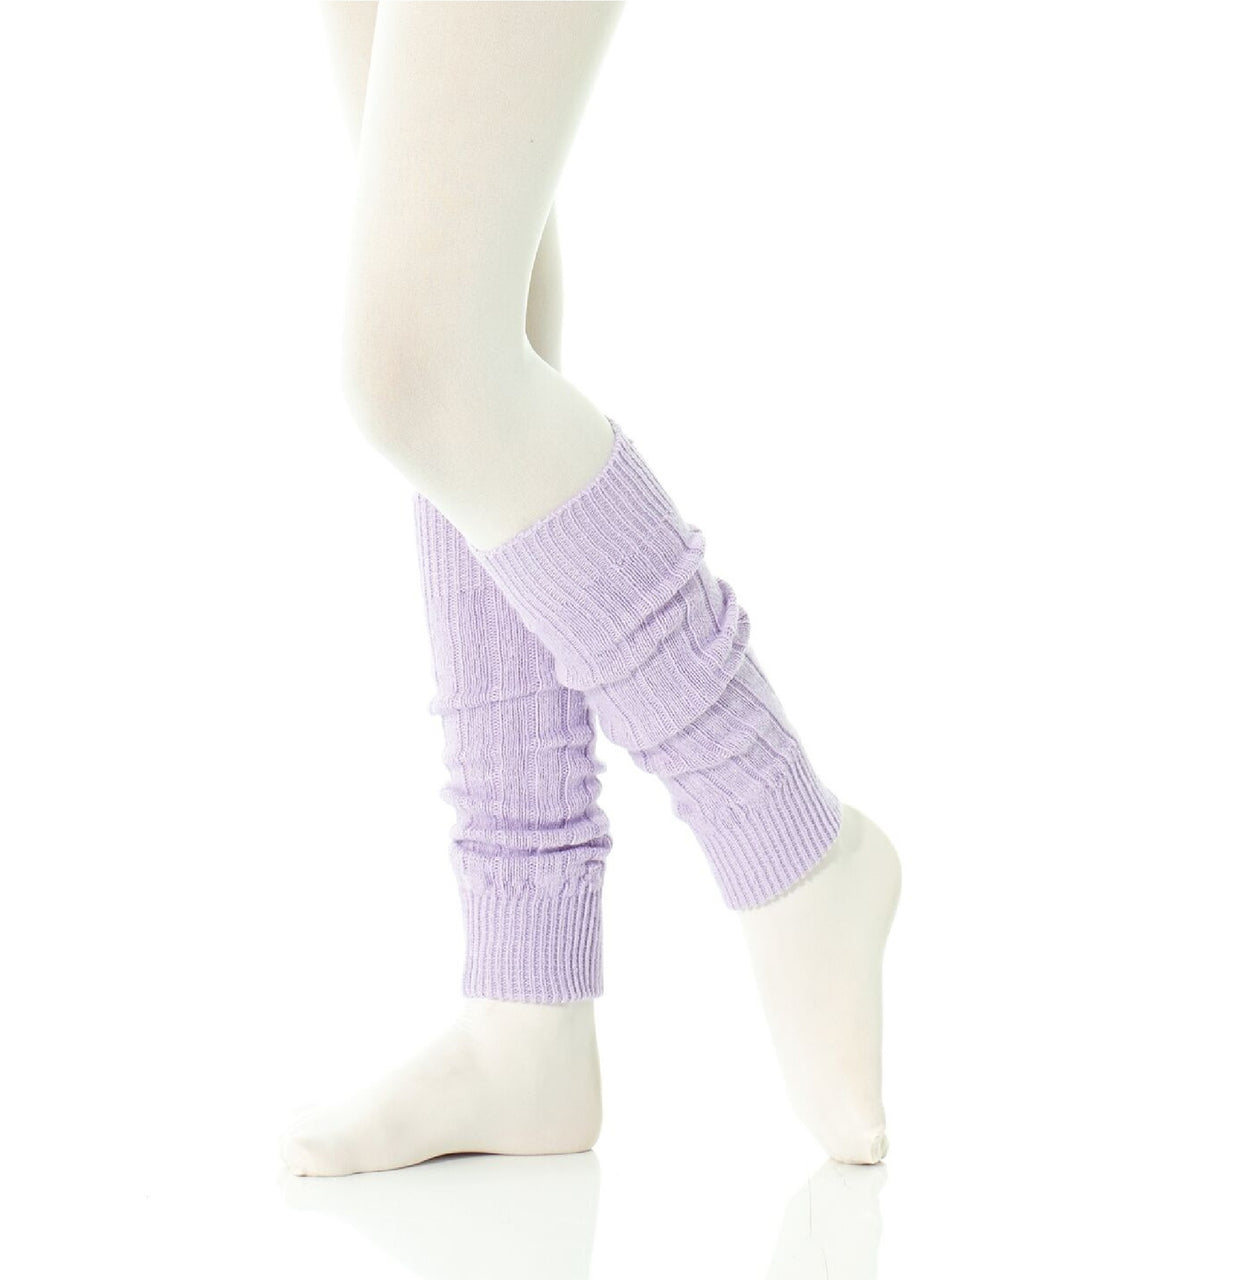 Mondor Microfibre Knee High Dance Socks - 104 Womens - Dancewear Centre